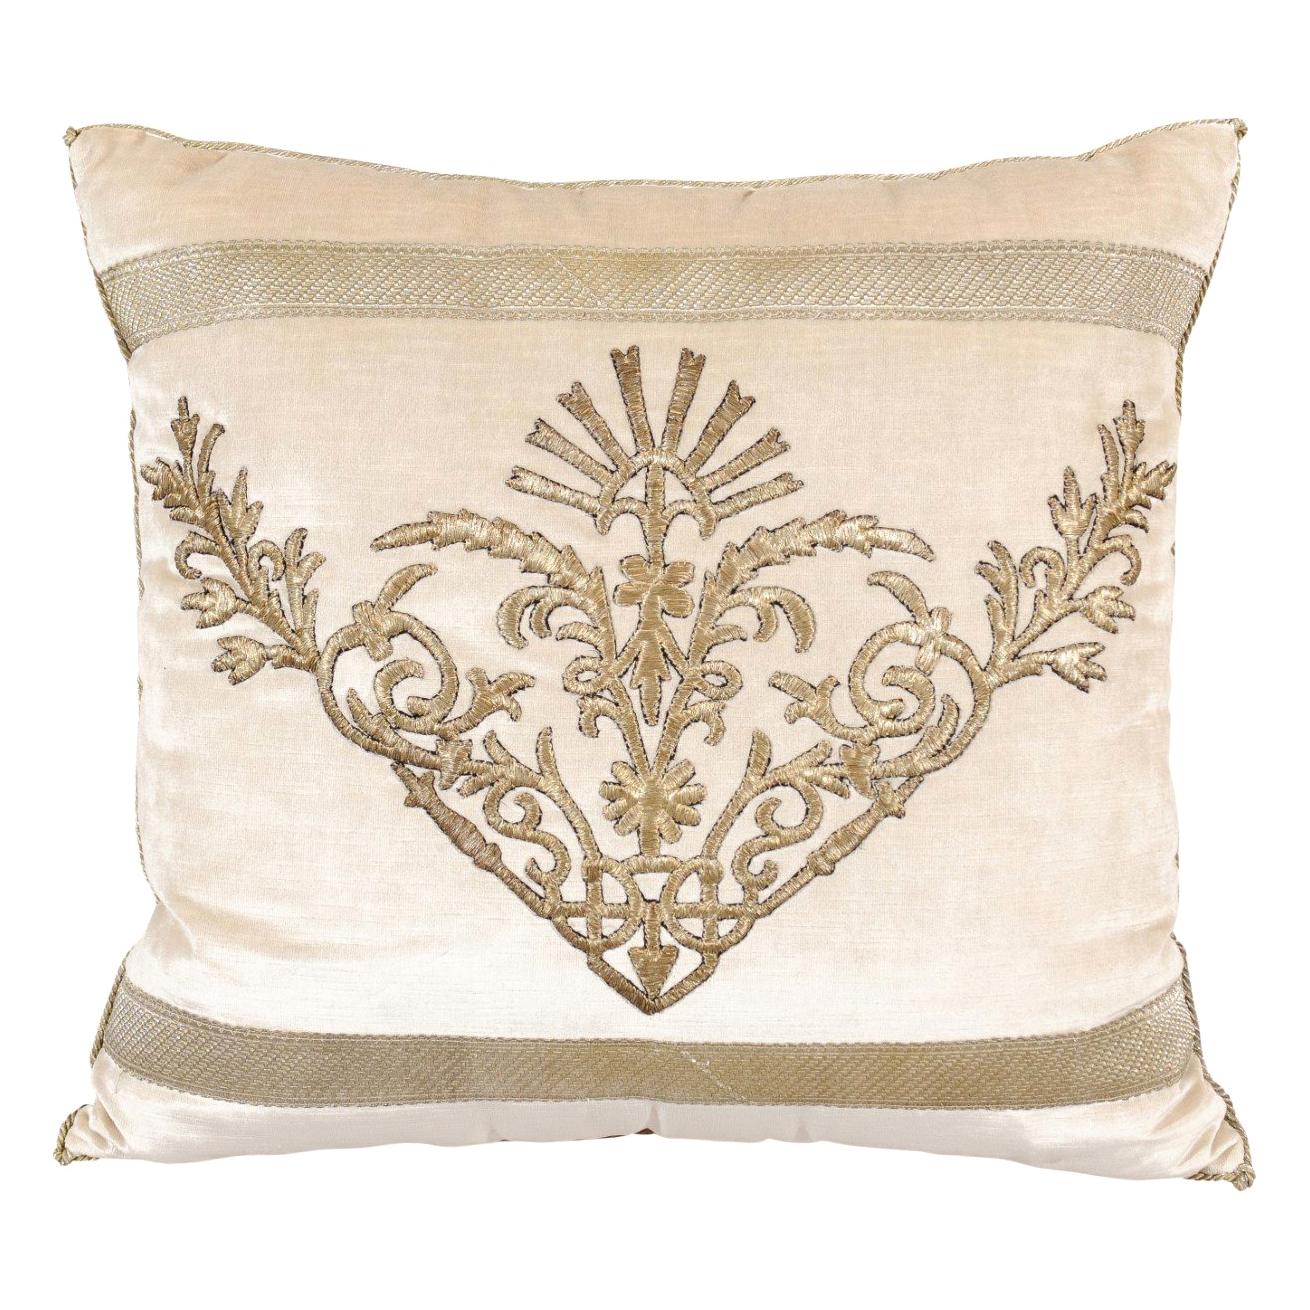 Antique Ottoman Empire Raised Silver Metallic Embroidery on Oyster Velvet Pillow